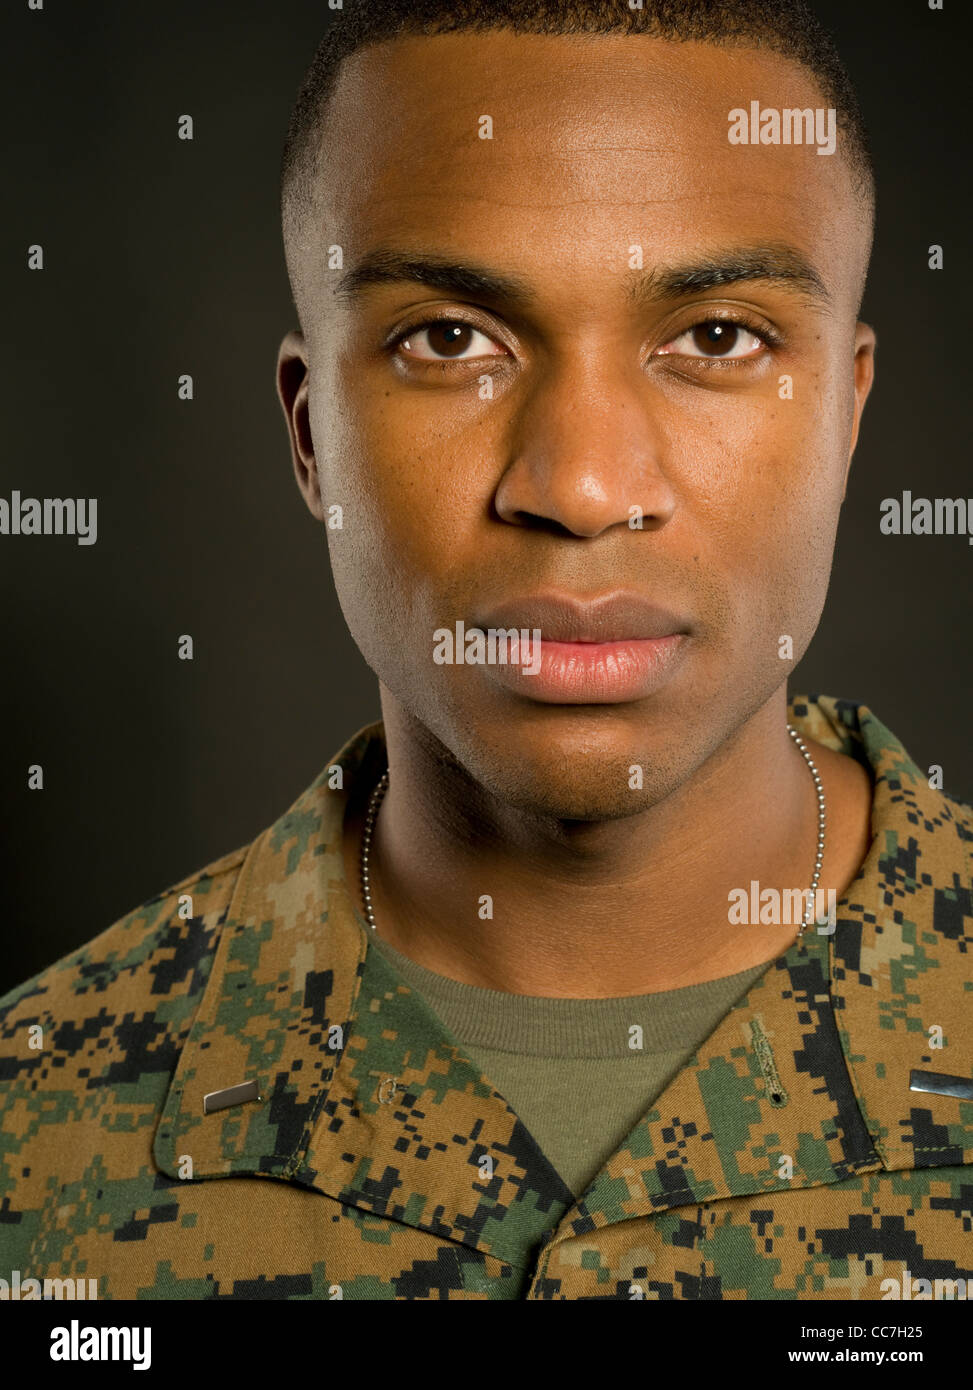 United States Marine Corps Officer in Marine Corps Combat Utility Uniform  MARPAT digital camouflage pattern woodland pattern Stock Photo - Alamy